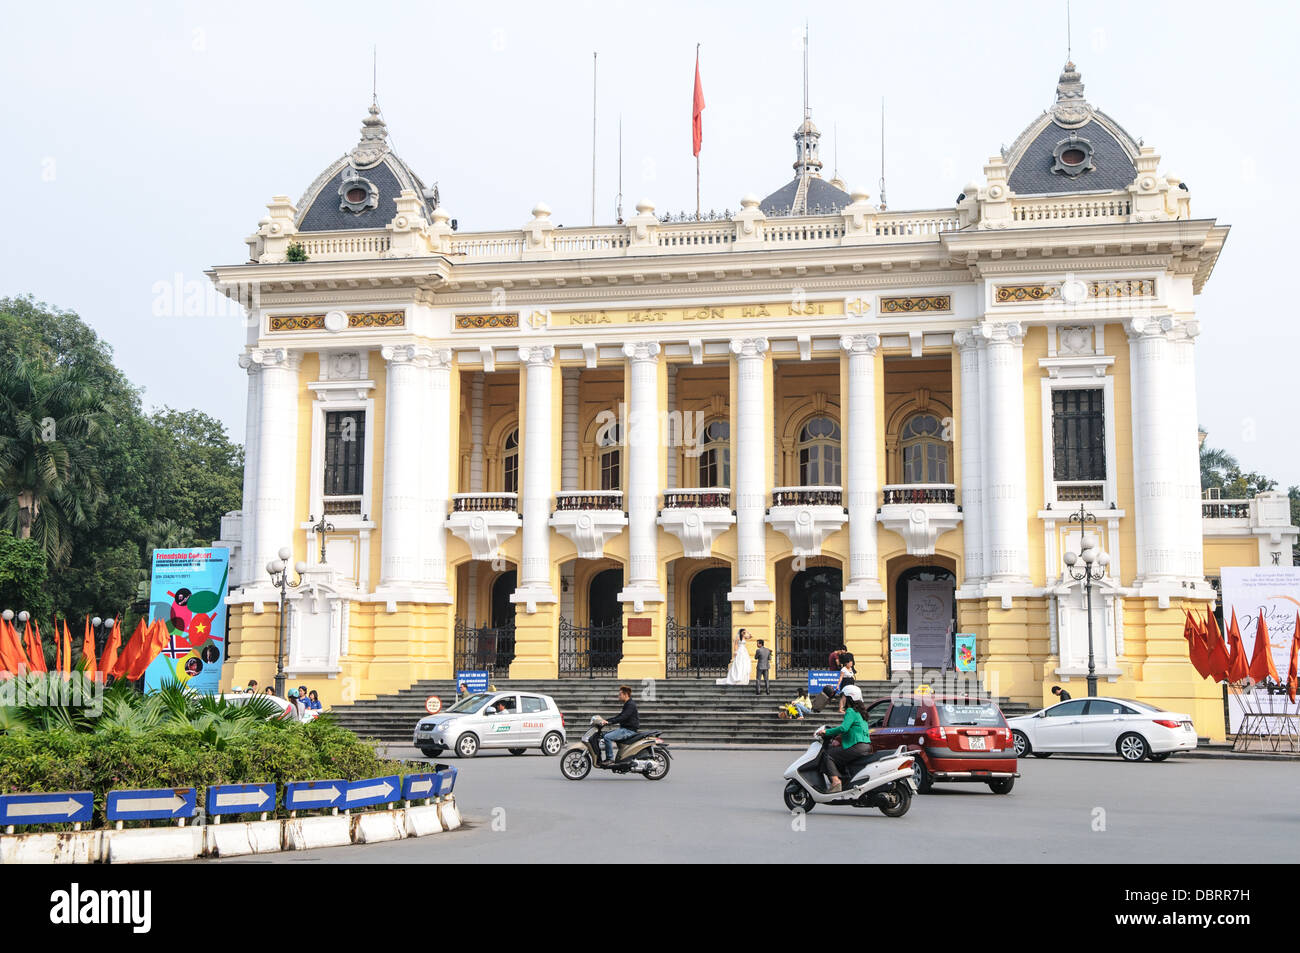 HANOI, Vietnam - Hanoi Opera House in stile coloniale francese, in Hoan Kiem district di Hanoi, Vietnam. Foto Stock